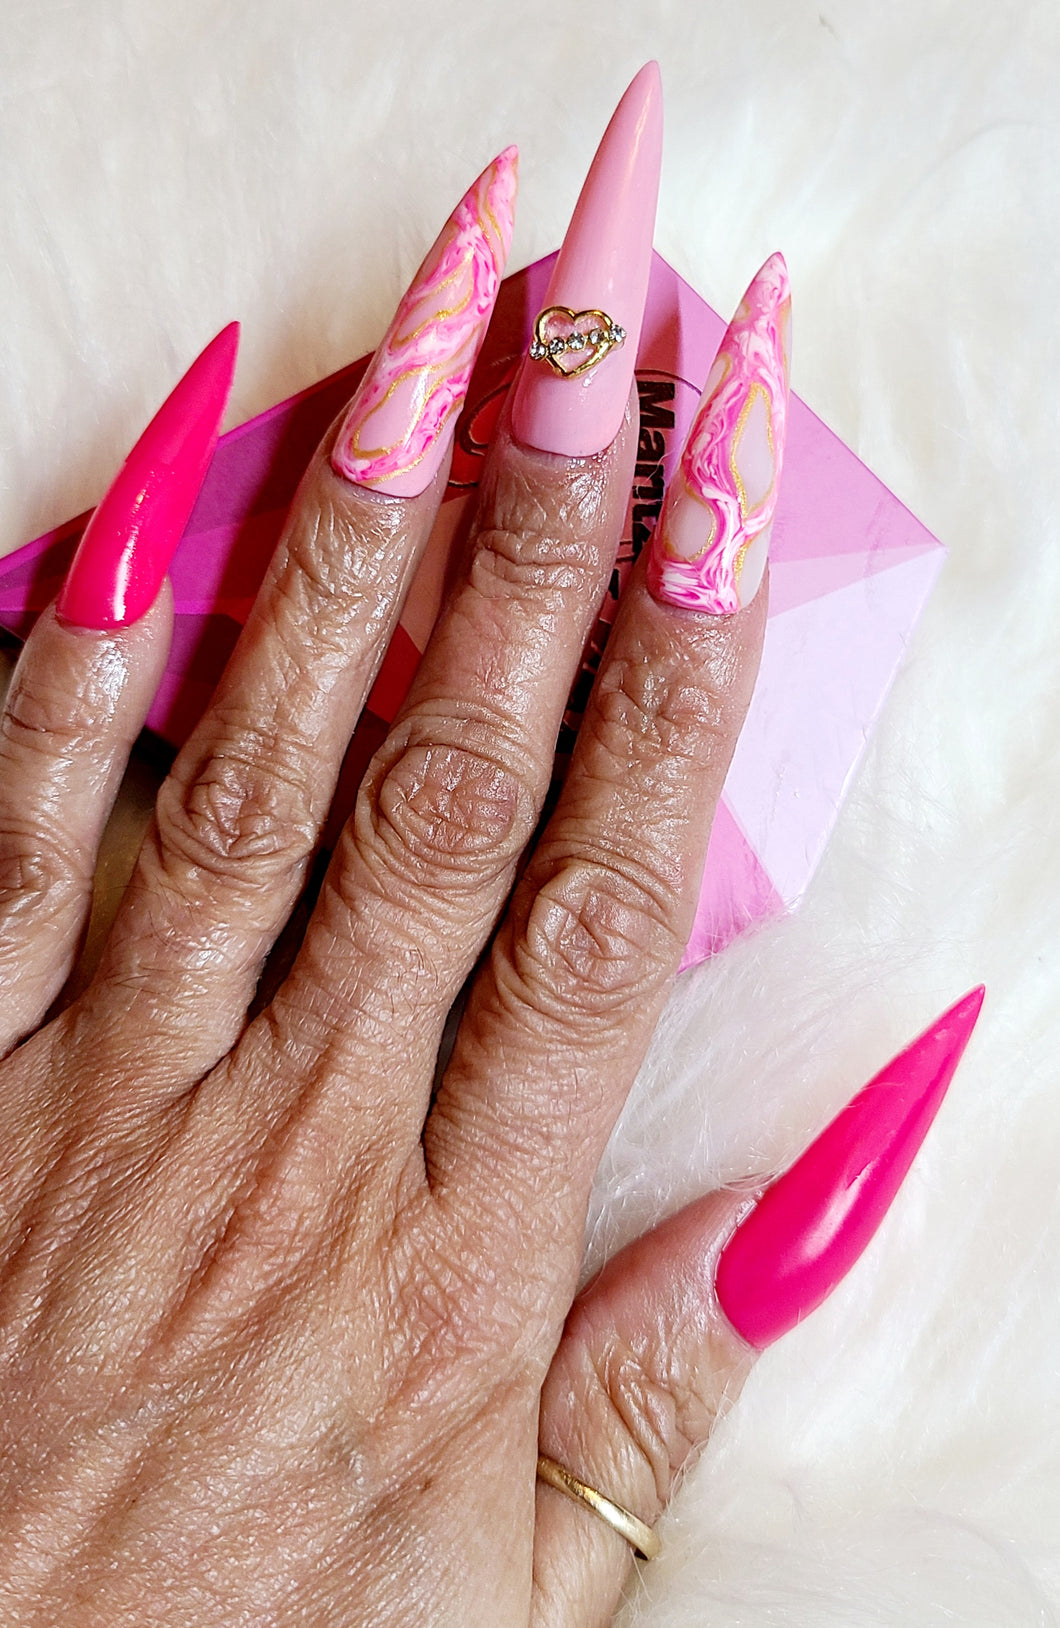 PINK LOVE - Maritza's Nails